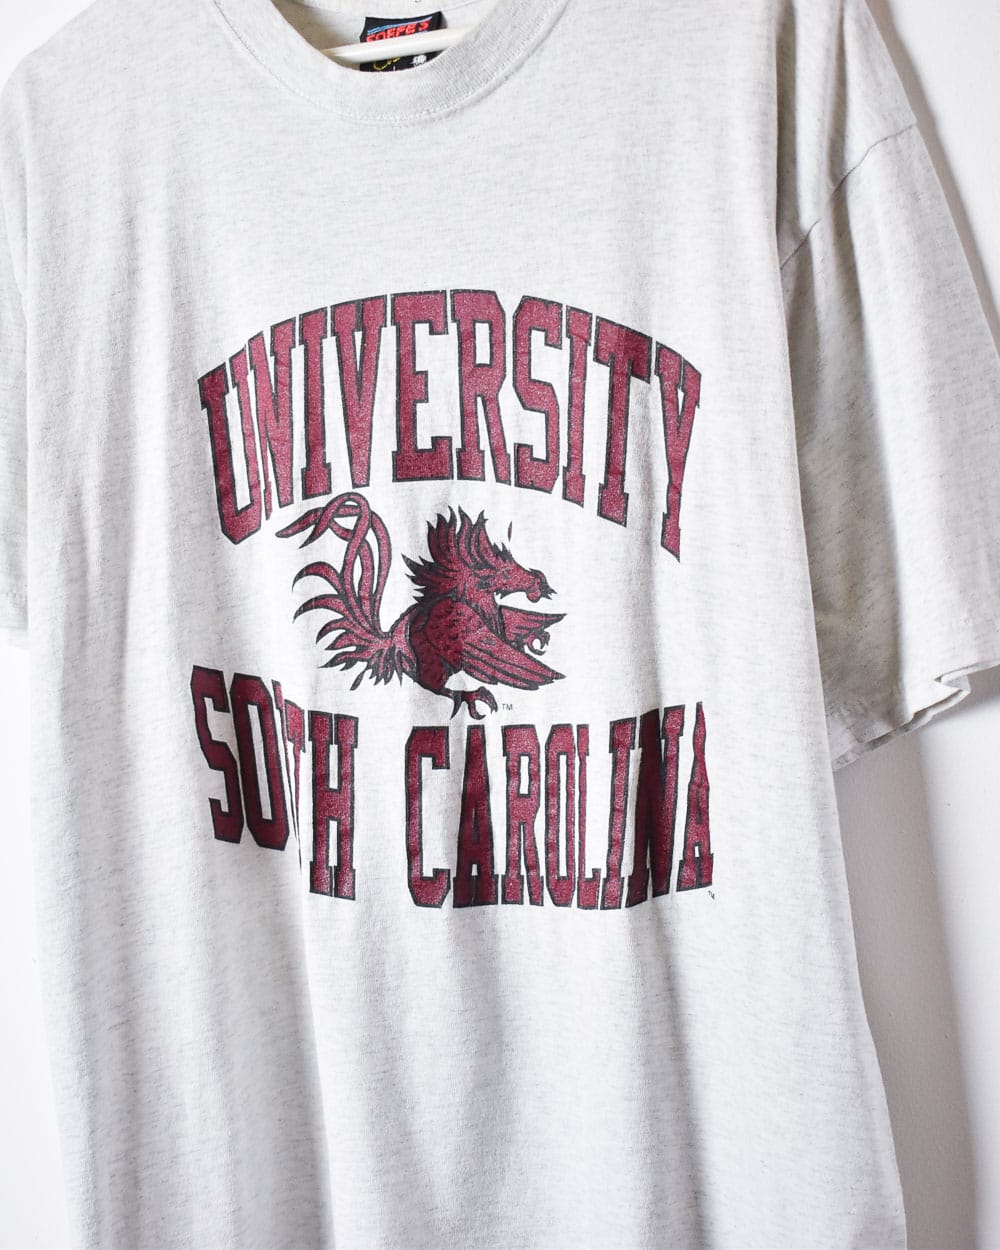 Stone South Carolina University Single Stitch T-Shirt - Large